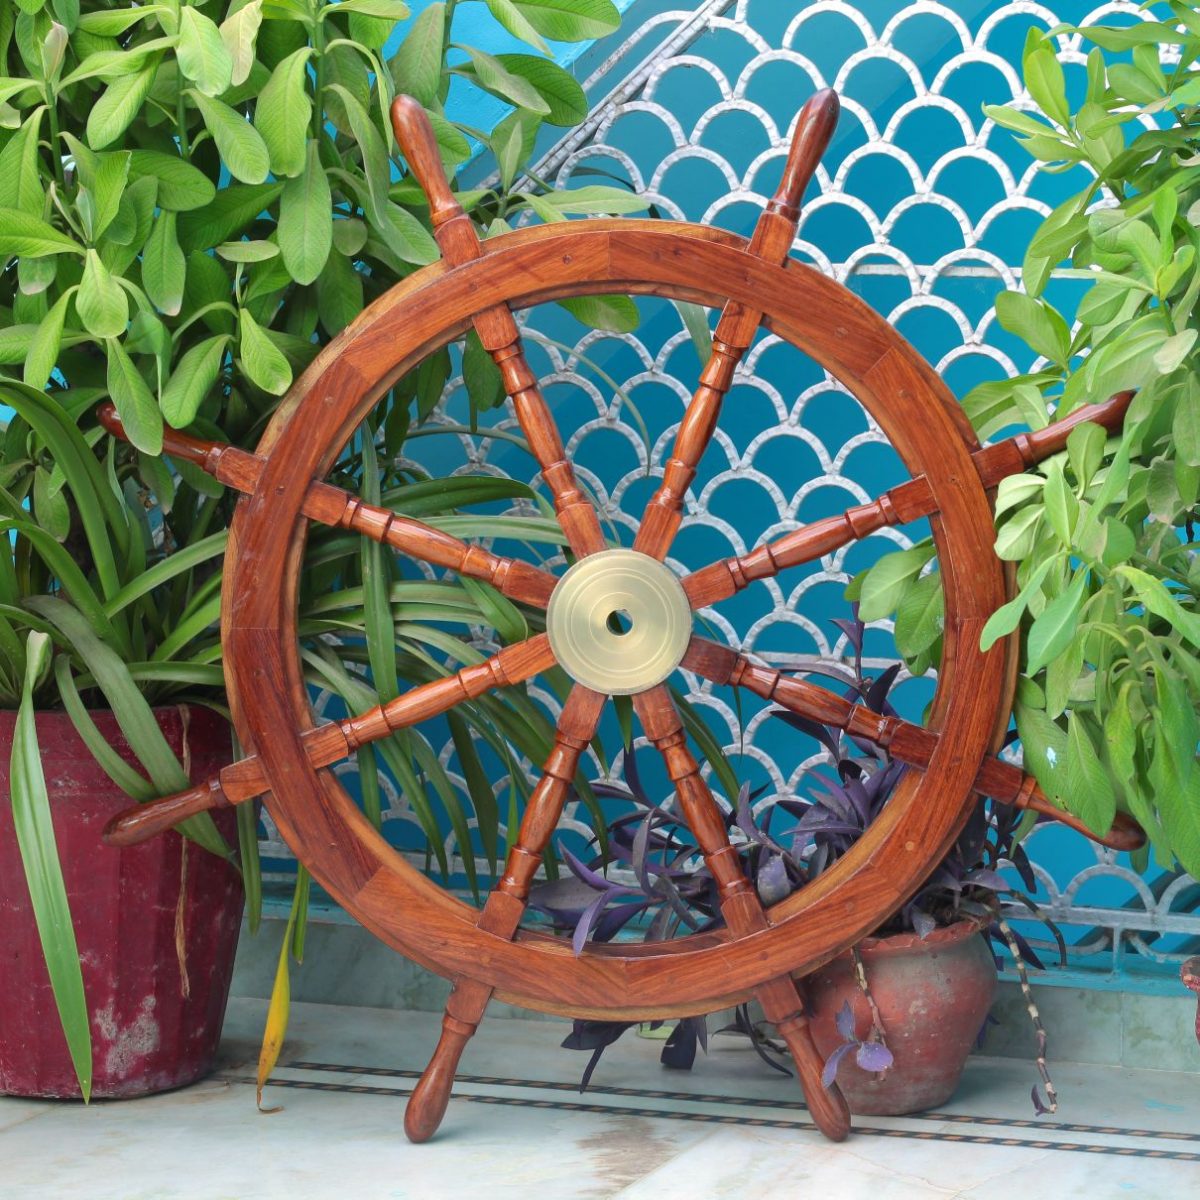 Nagina International Elite Solid Wood Pirate's Ship Wheel | Maritime Decor | Retirement Gift (Turret Spokes)